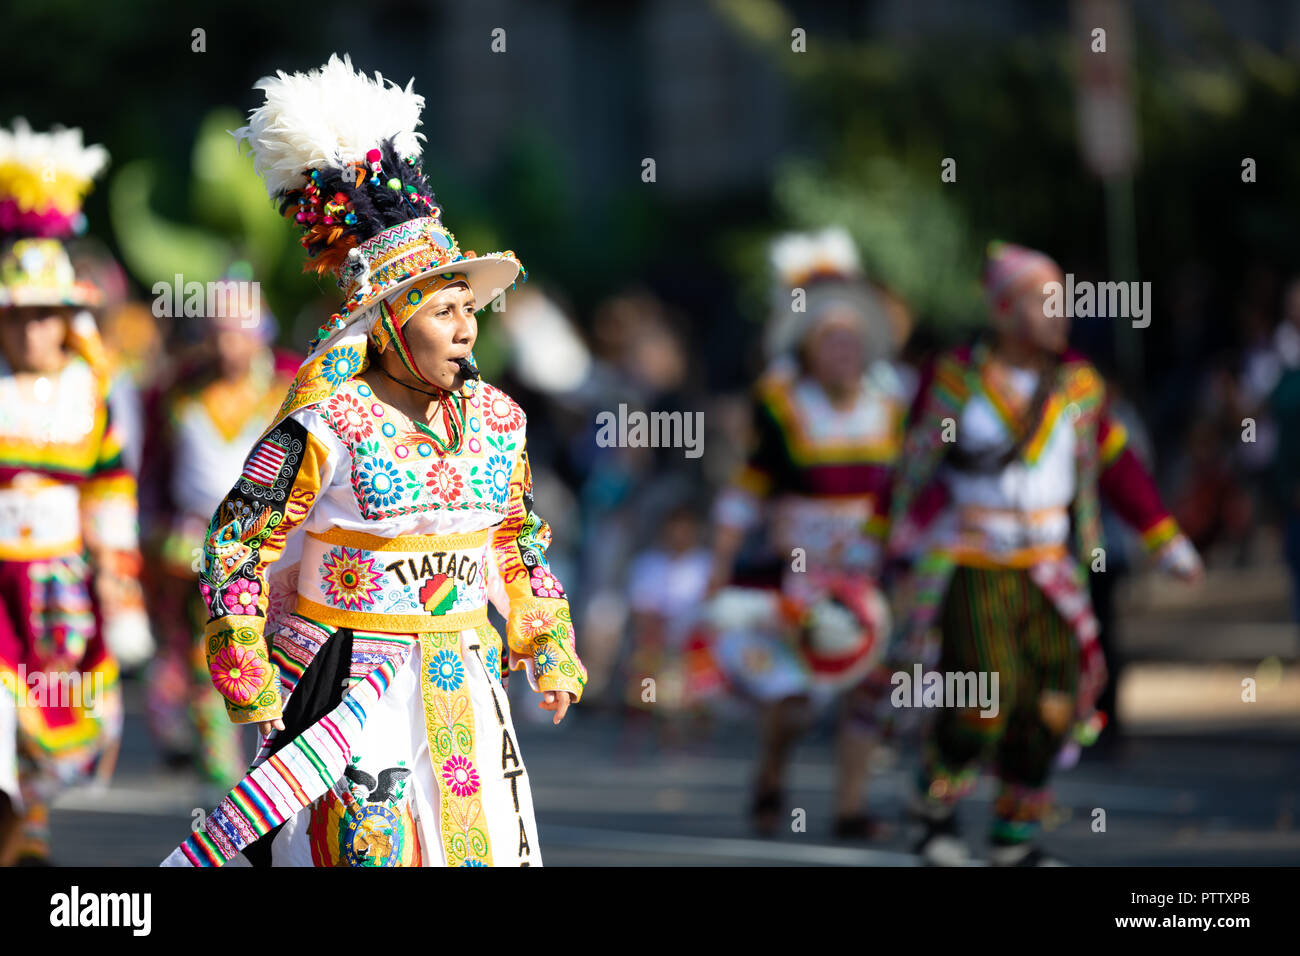 Washington, D.C., USA - September 29, 2018: The Fiesta DC Parade, bolivian woman wearing traditional clothing walking down the street Stock Photo